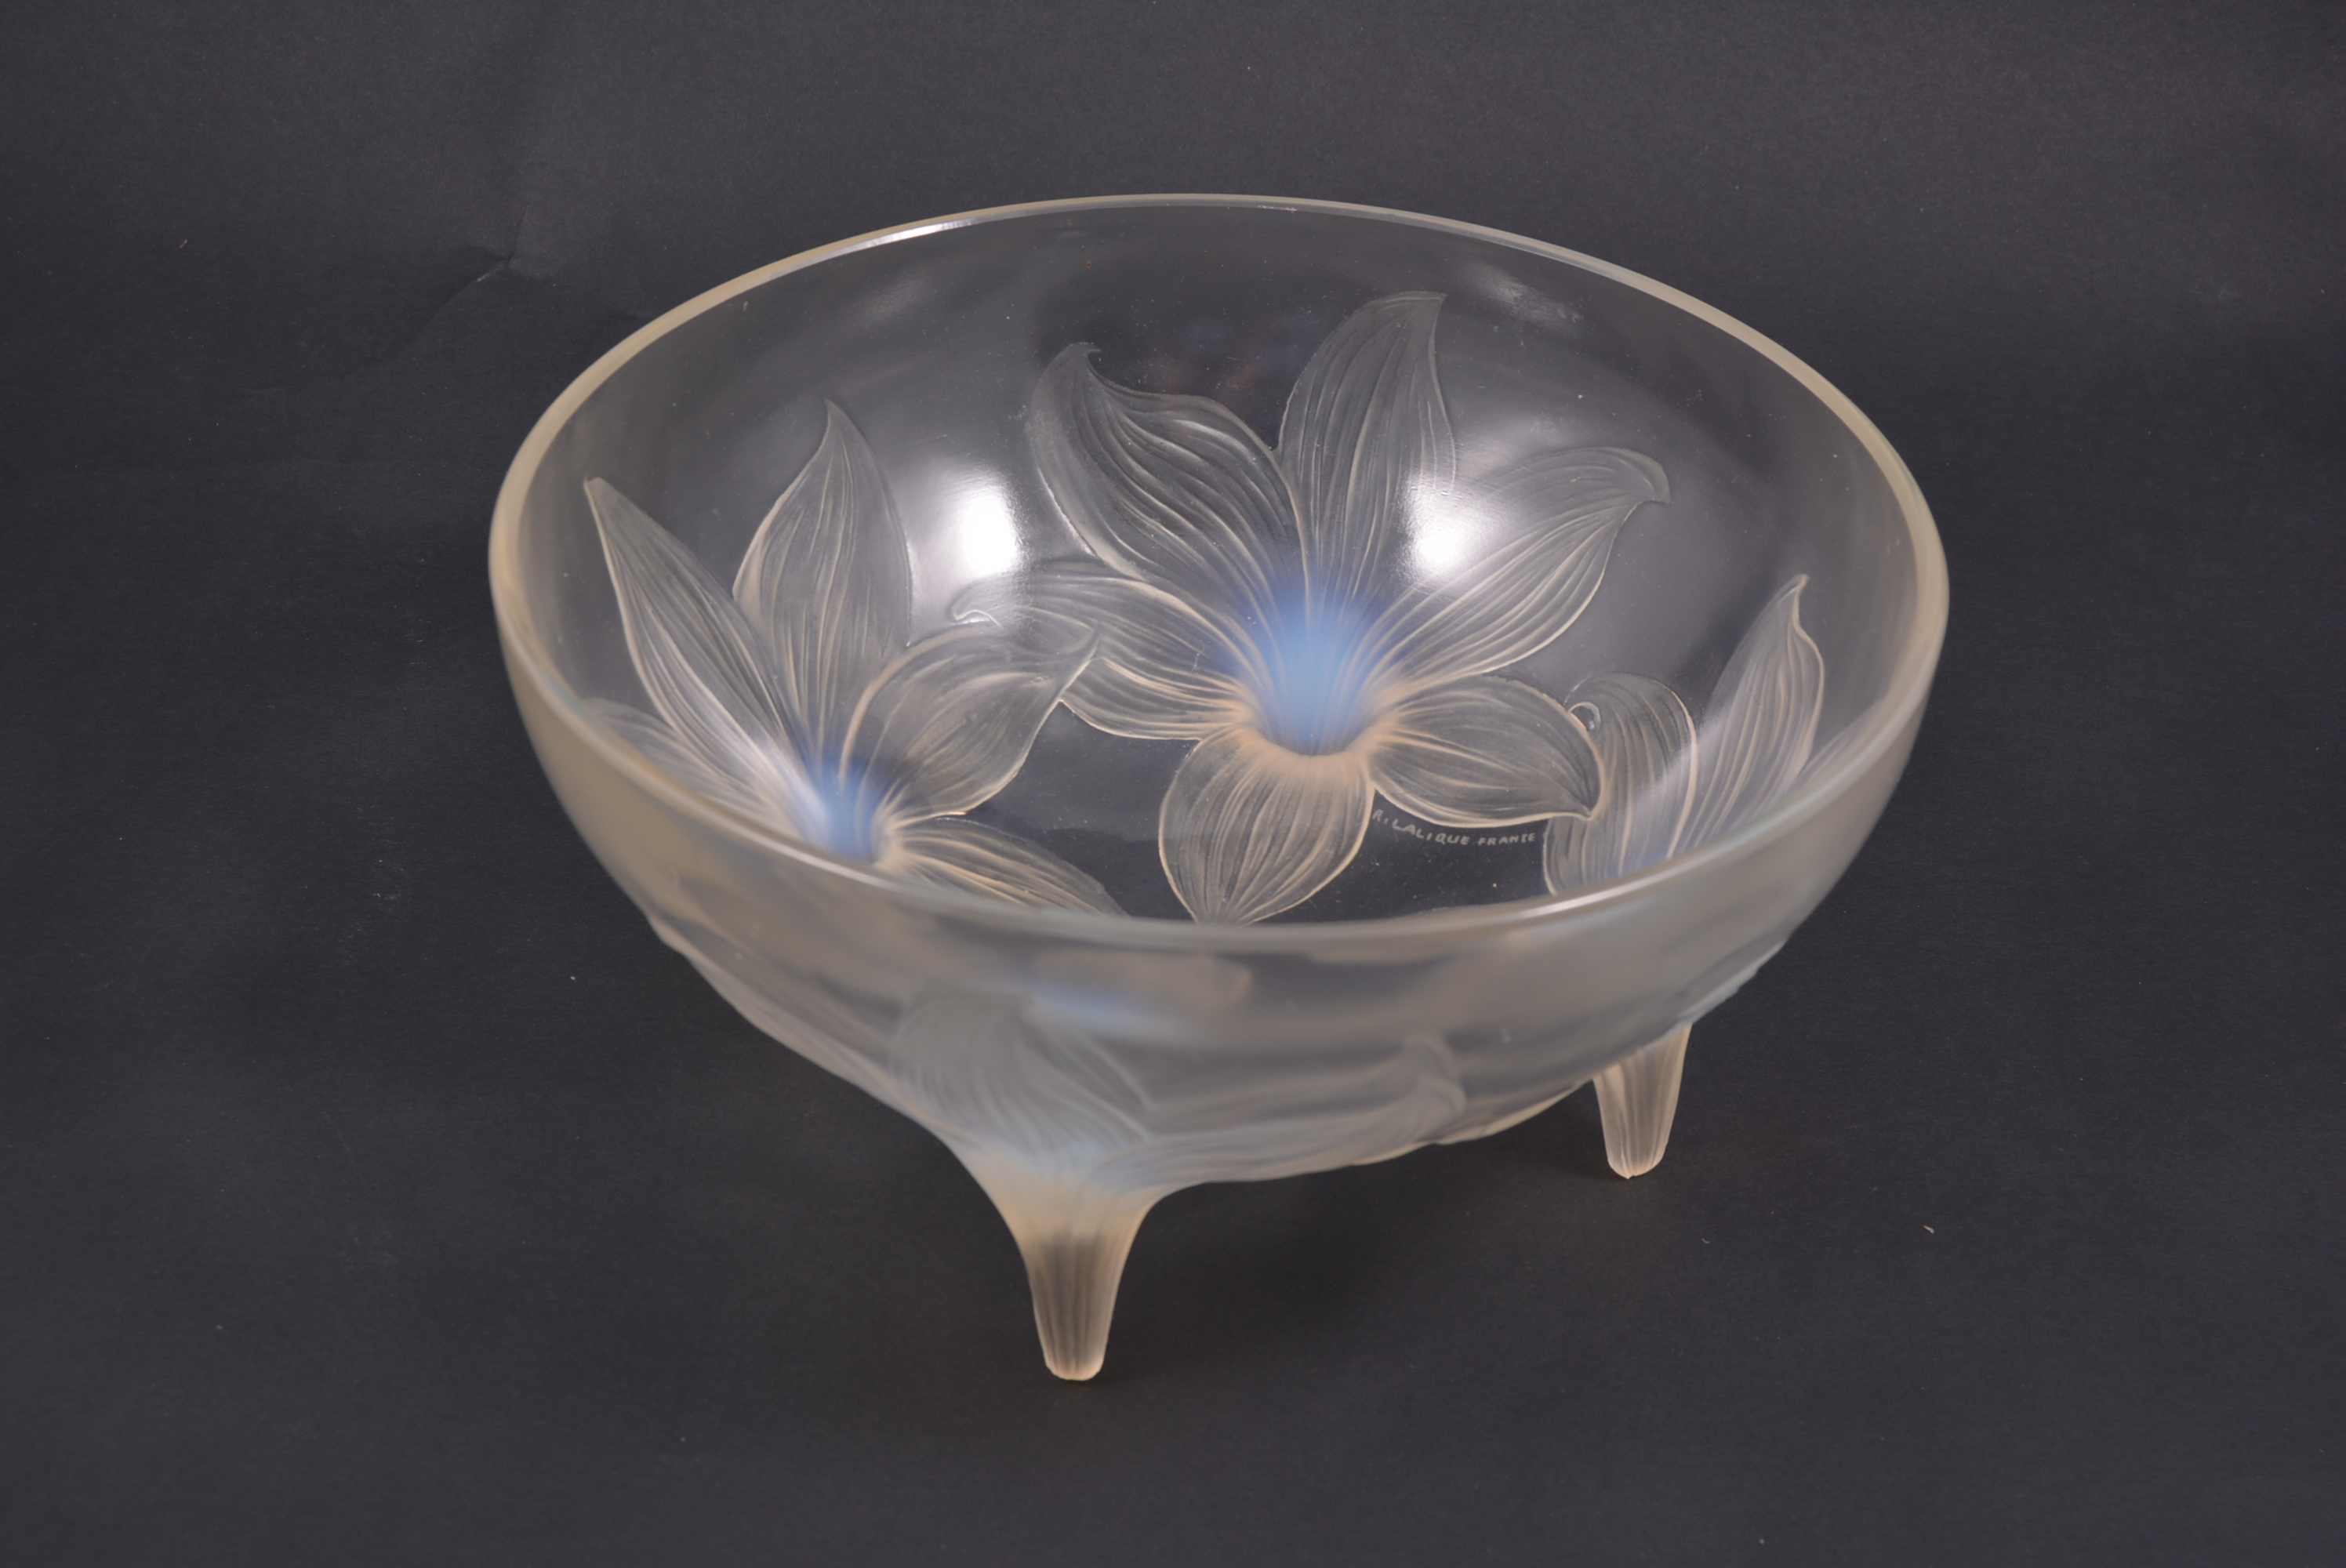 René Lalique, 'Lys' an opalescent glass bowl, designed 1924, engraved and moulded 'R. Lalique', 23.